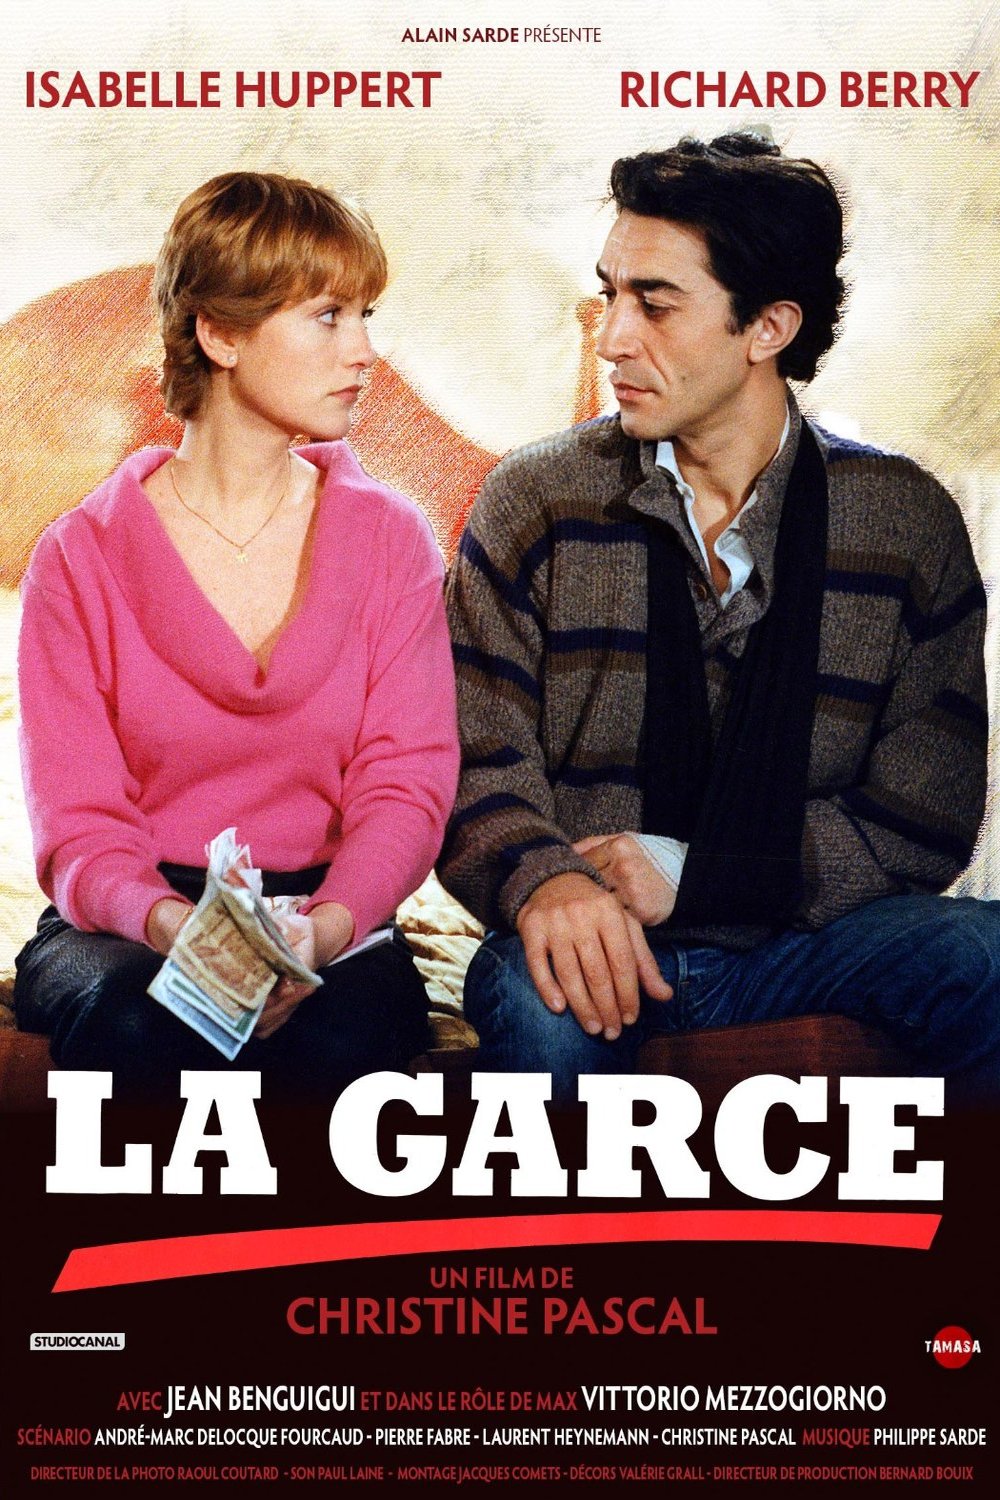 Poster of the movie La Garce